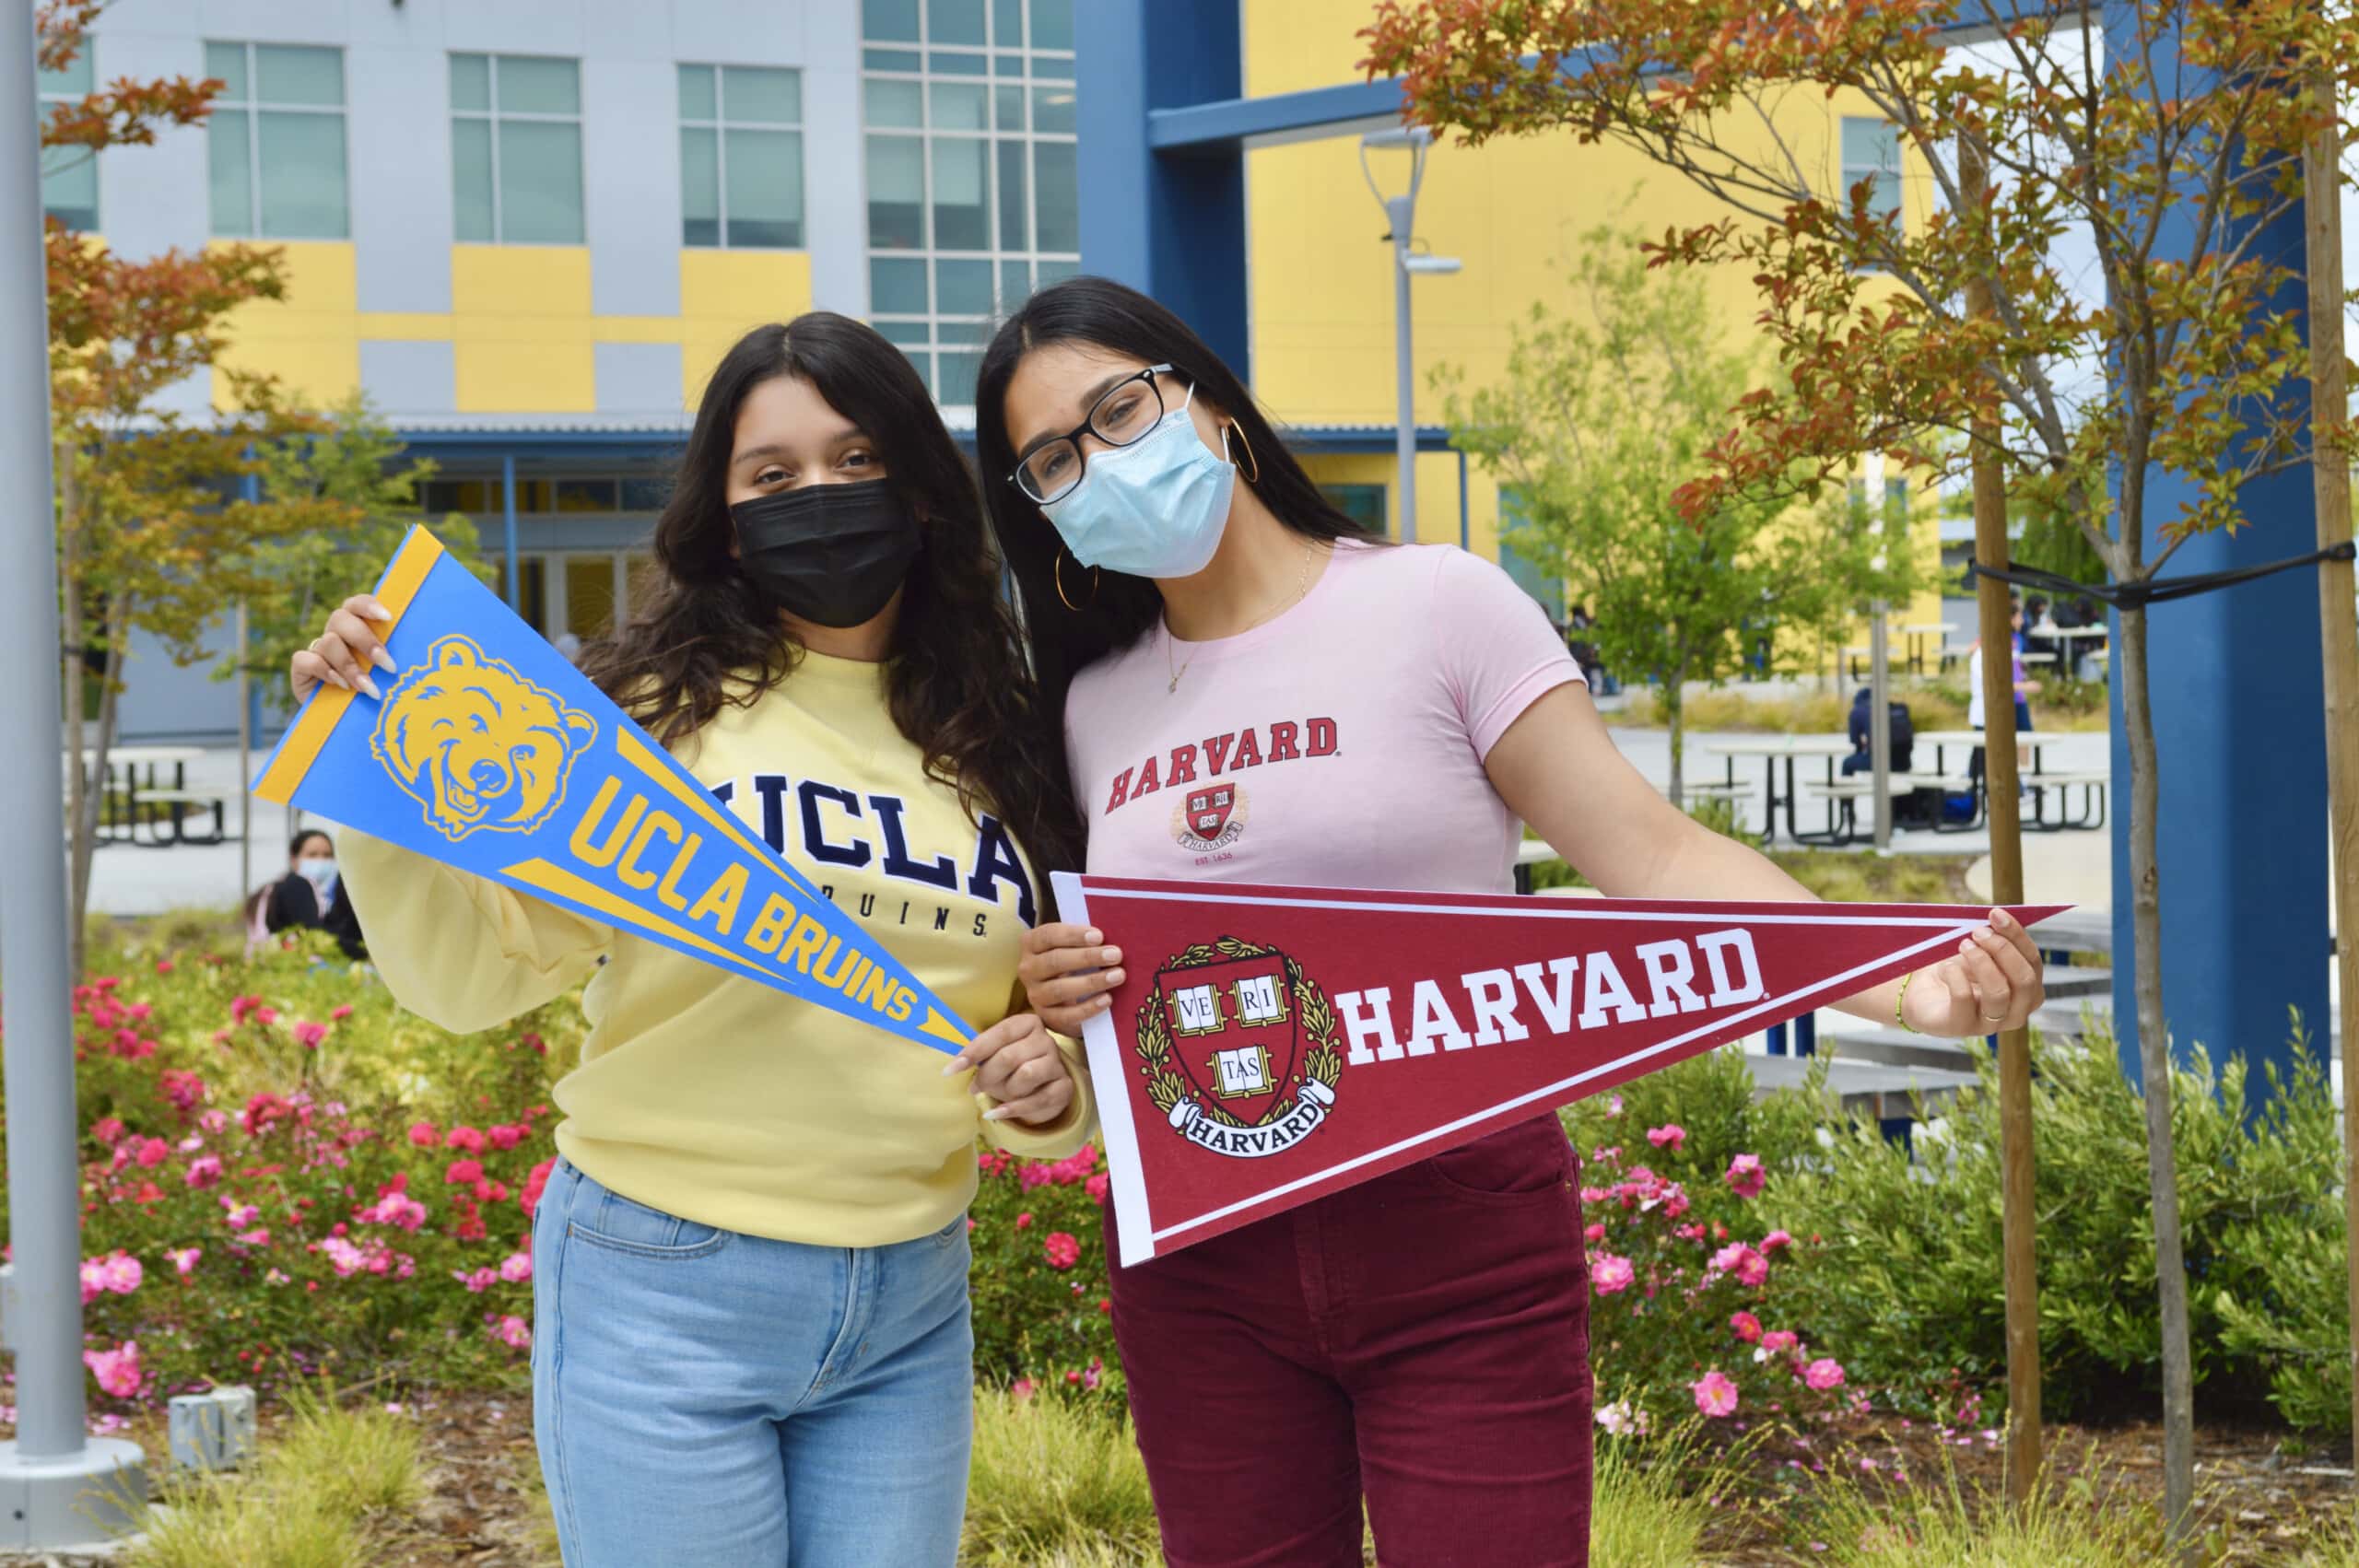 Students holding UCLA and Harvard flags at Making Waves Acamdey campus